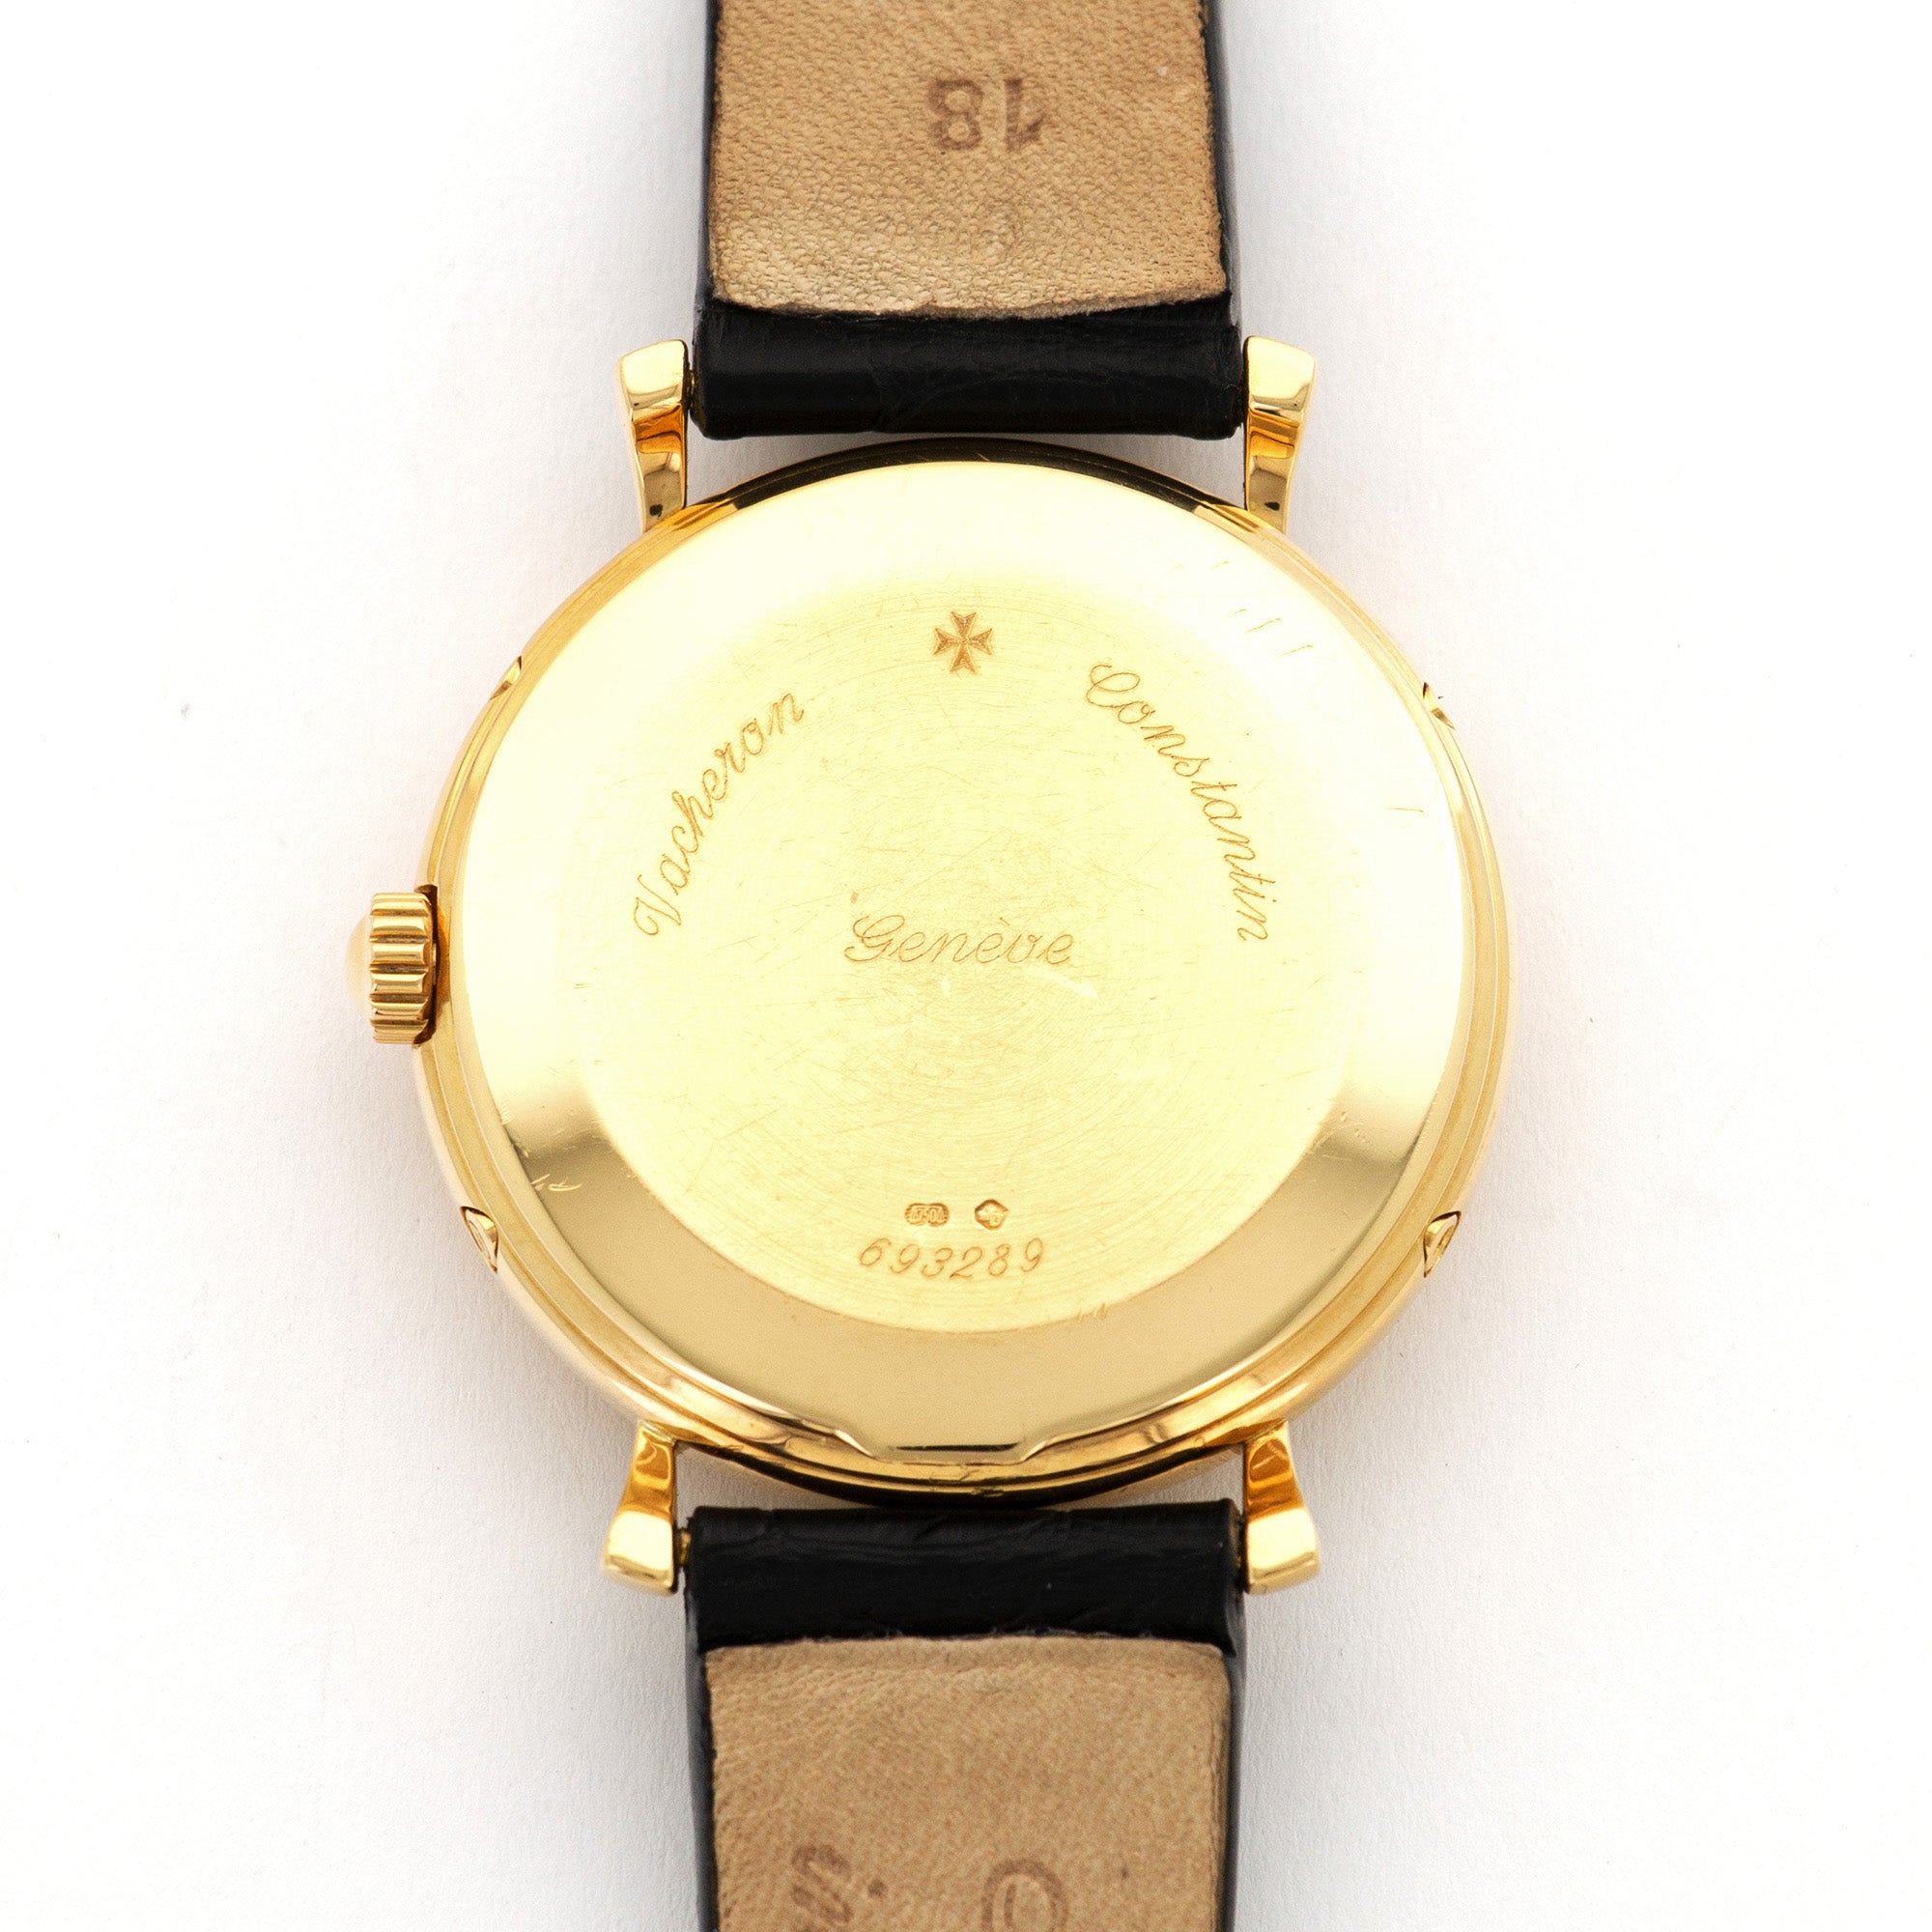 Vacheron Constantin - Vacheron Constantin Yellow Gold Les Historiques Triple Calendar Moonphase Watch Ref. 47050 - The Keystone Watches